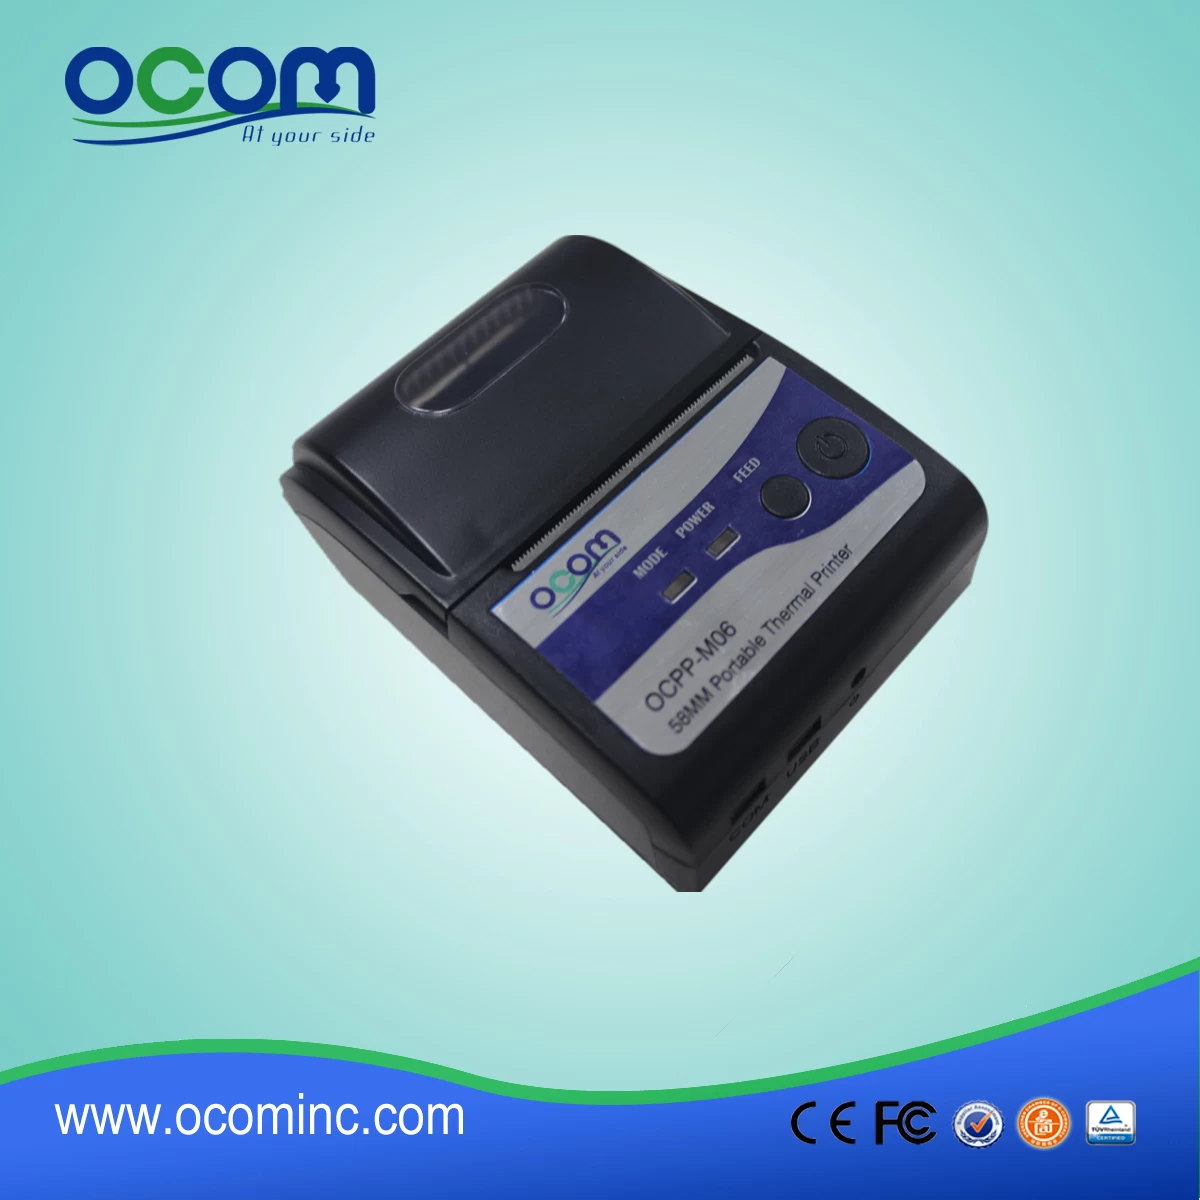 (OCPP-M06)China OCOM good selling 58mm thermal printer,thermal printer 58mm